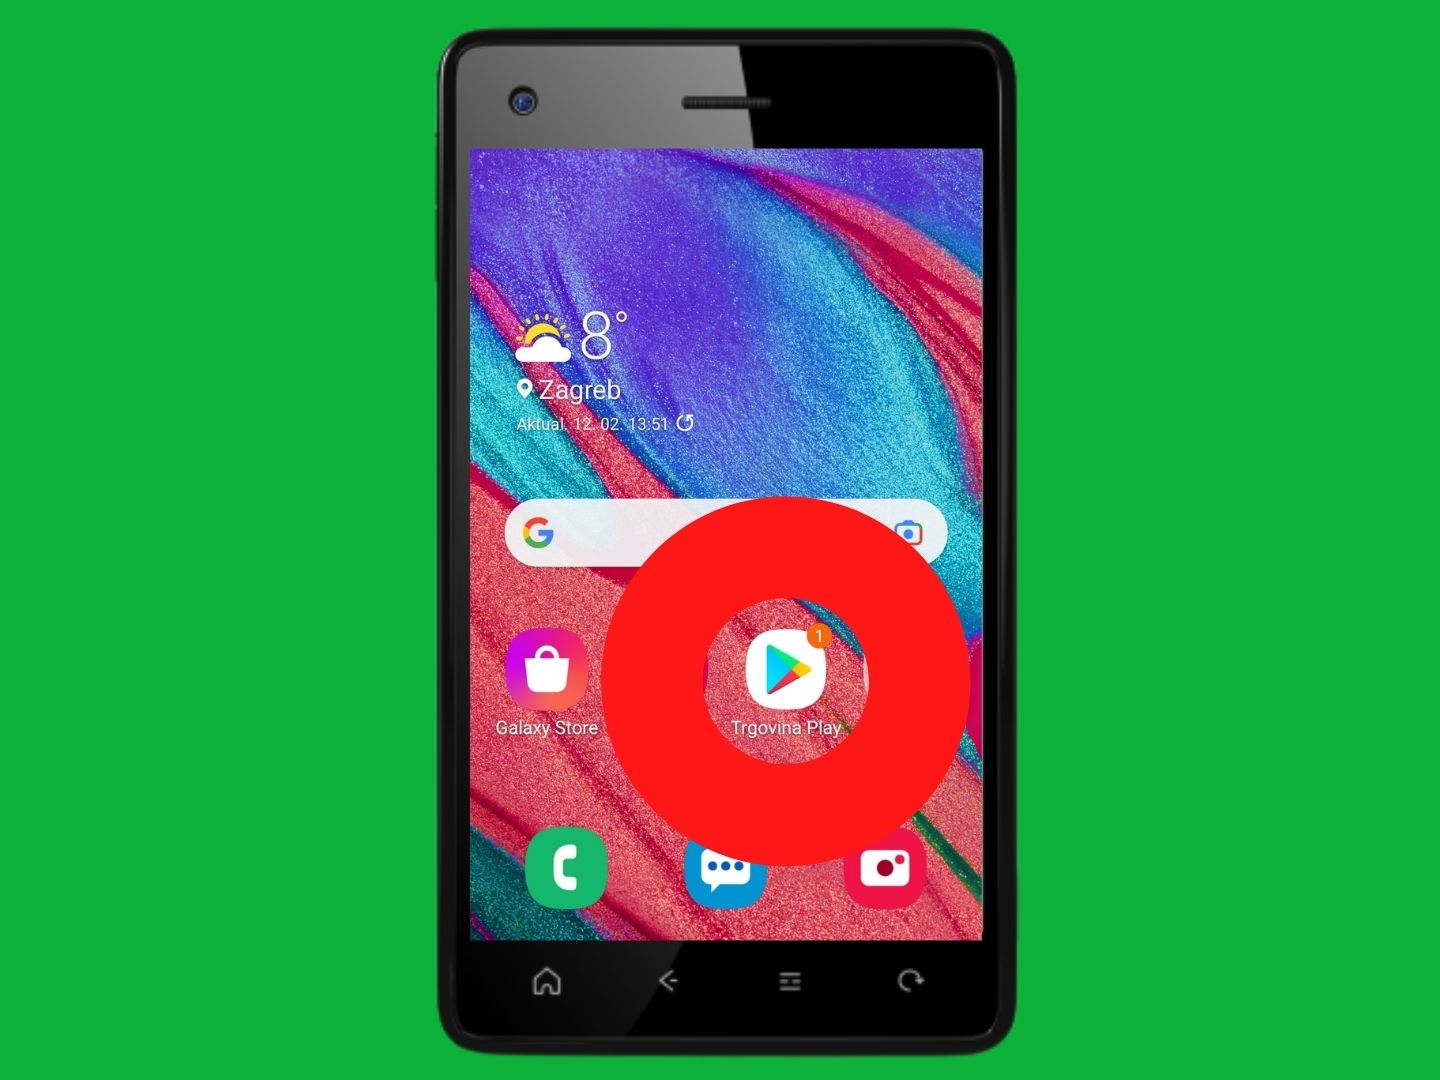 Početni zaslon Android mobilnog uređaja s označenom Google Play trgovinom